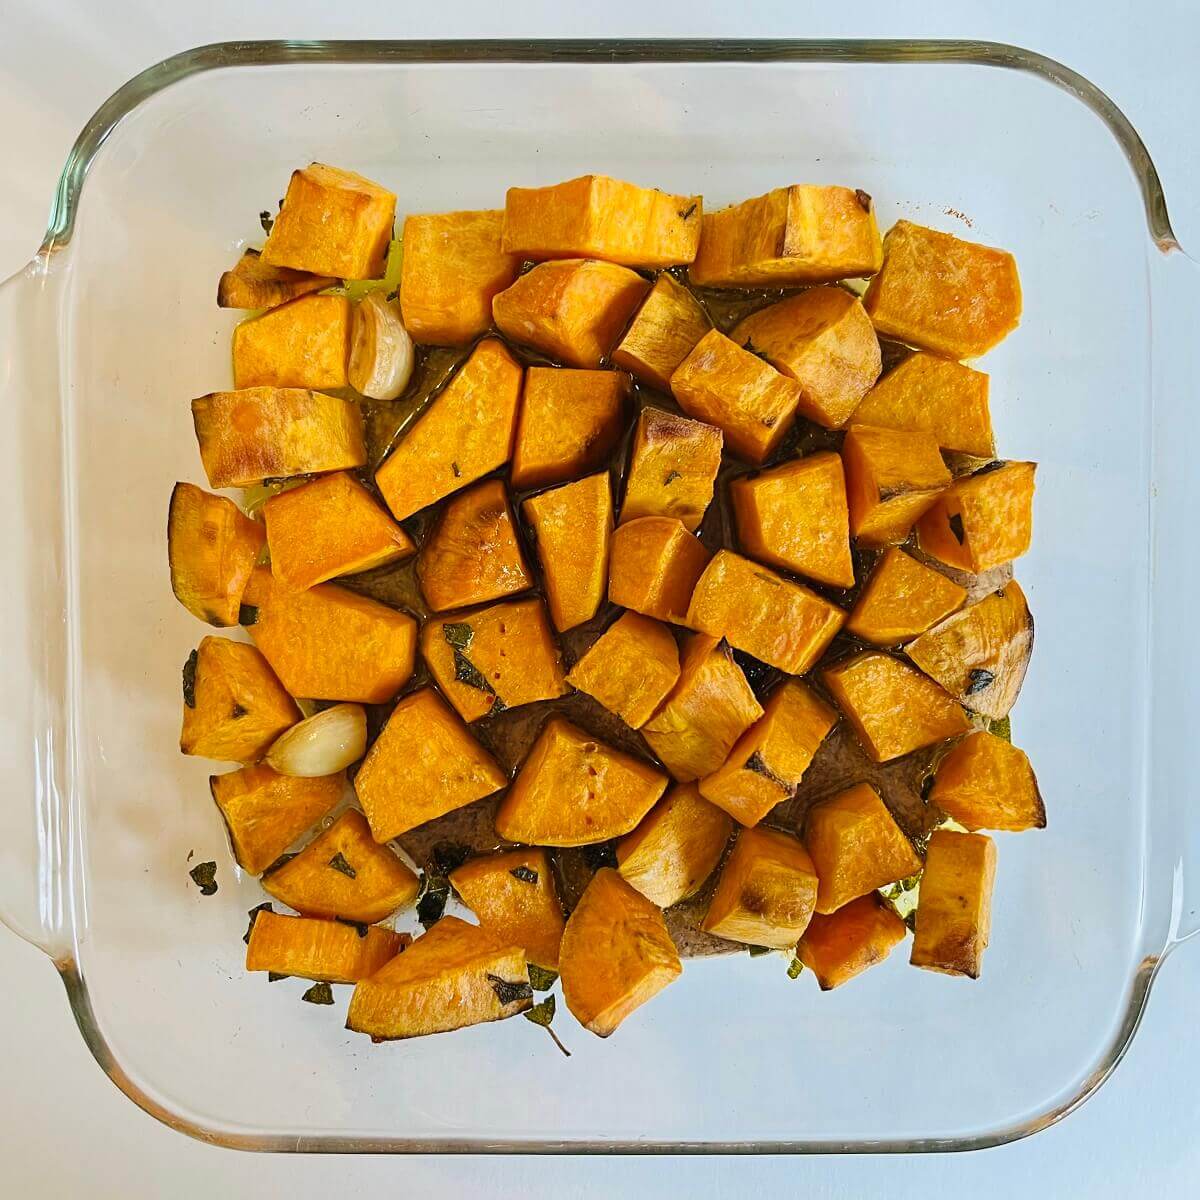 Roasted sweet potato chunks in a glass baking dish.